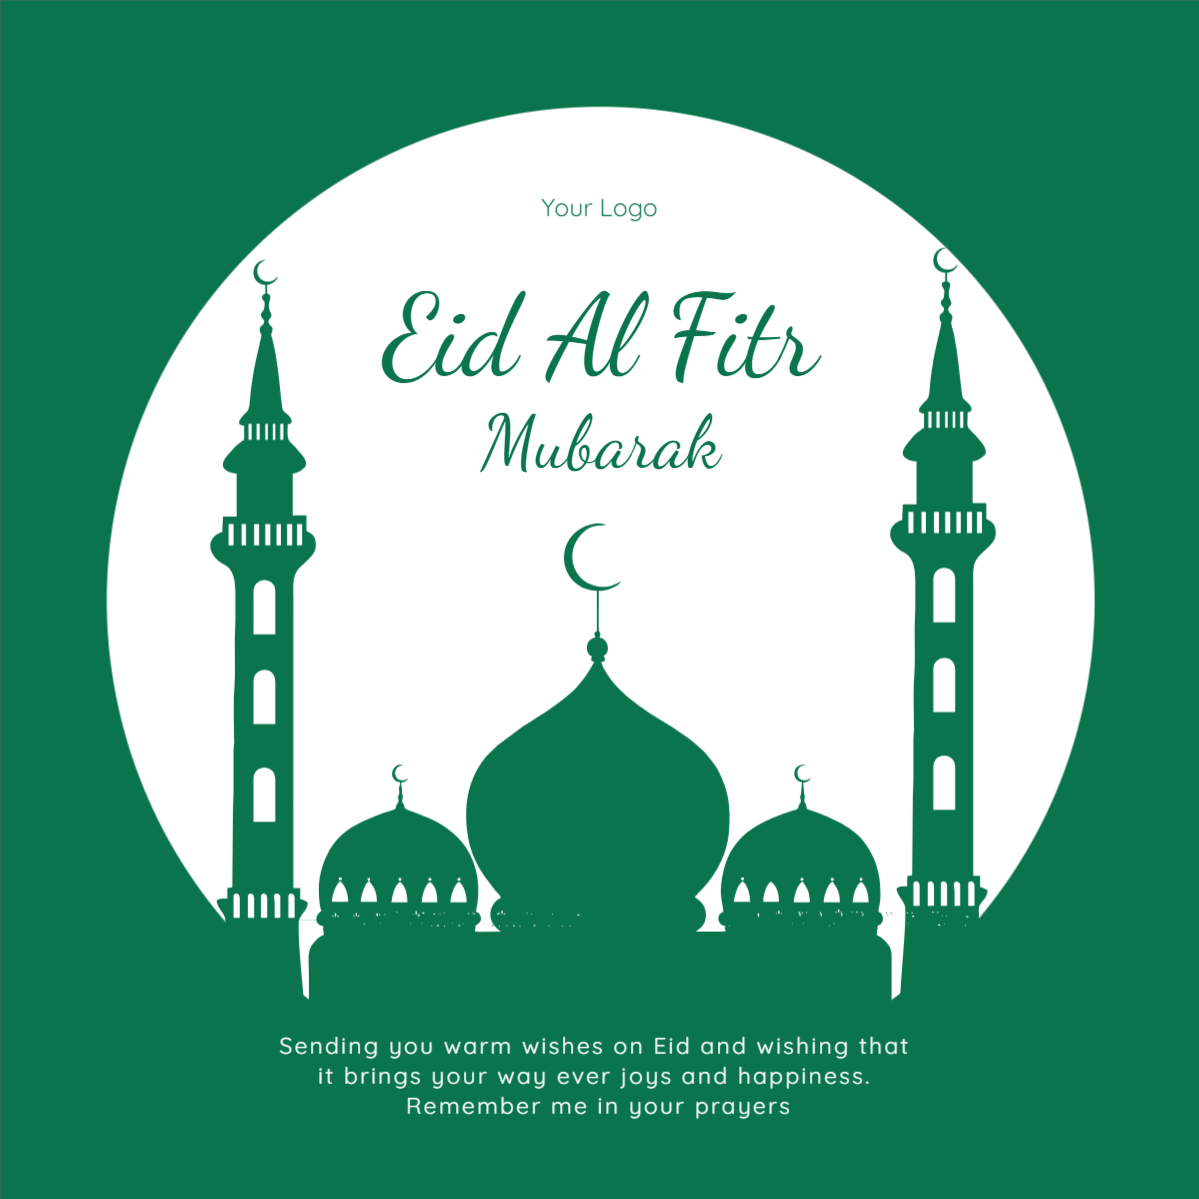 Eid Al Fitr Mubarak template design download for free